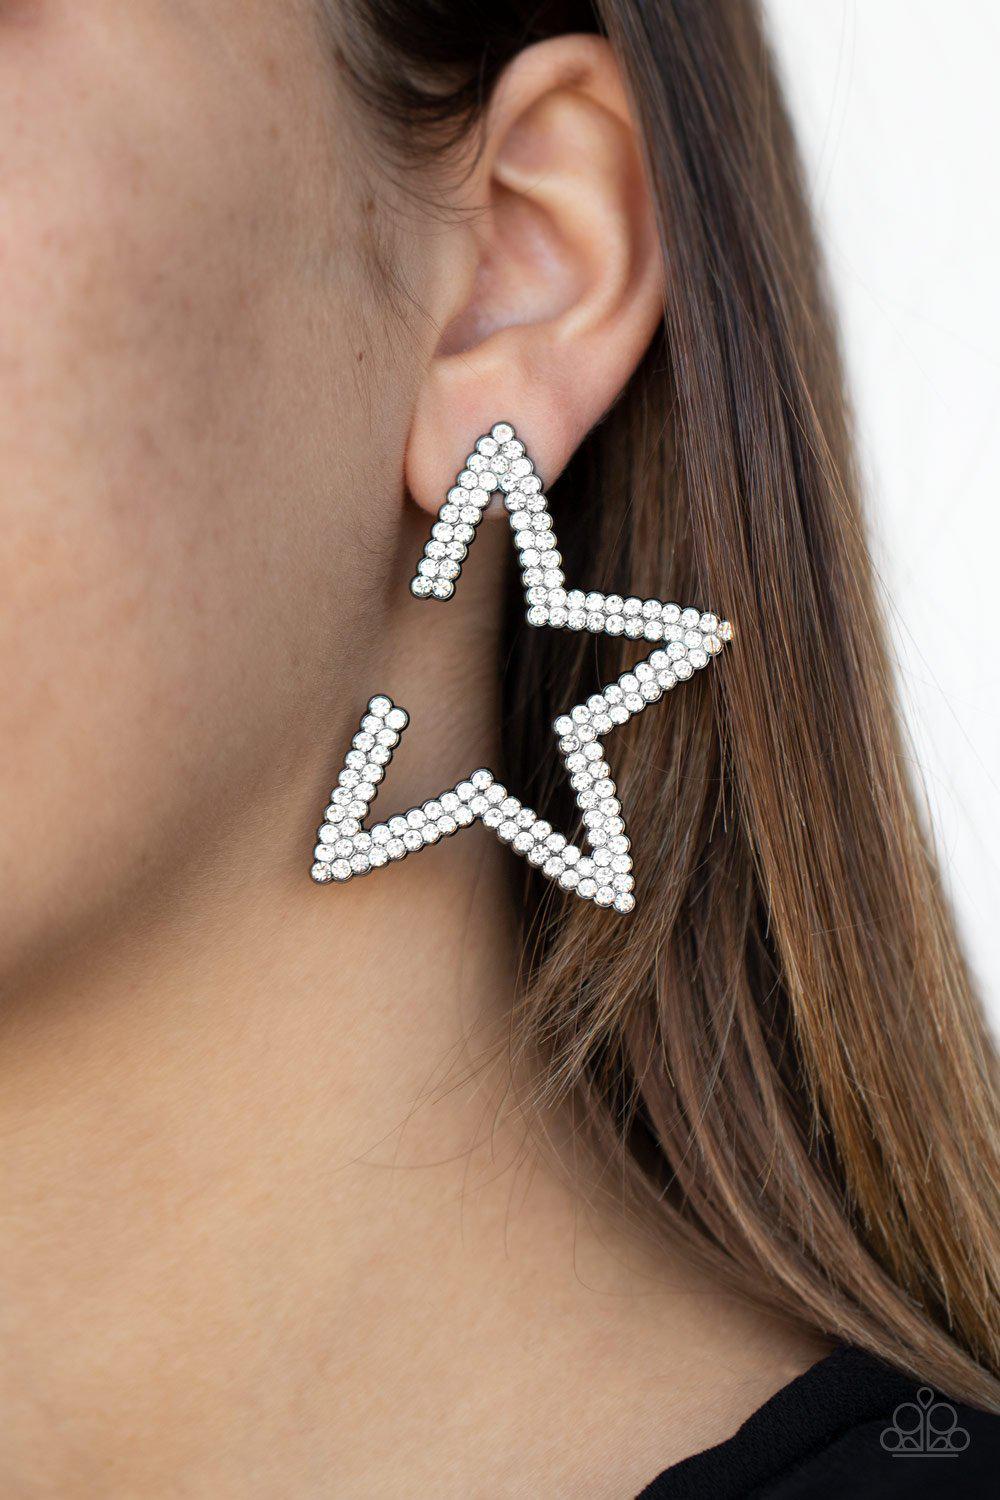 Star Player Gunmetal Black and White Rhinestone Earrings - Paparazzi Accessories - model -CarasShop.com - $5 Jewelry by Cara Jewels